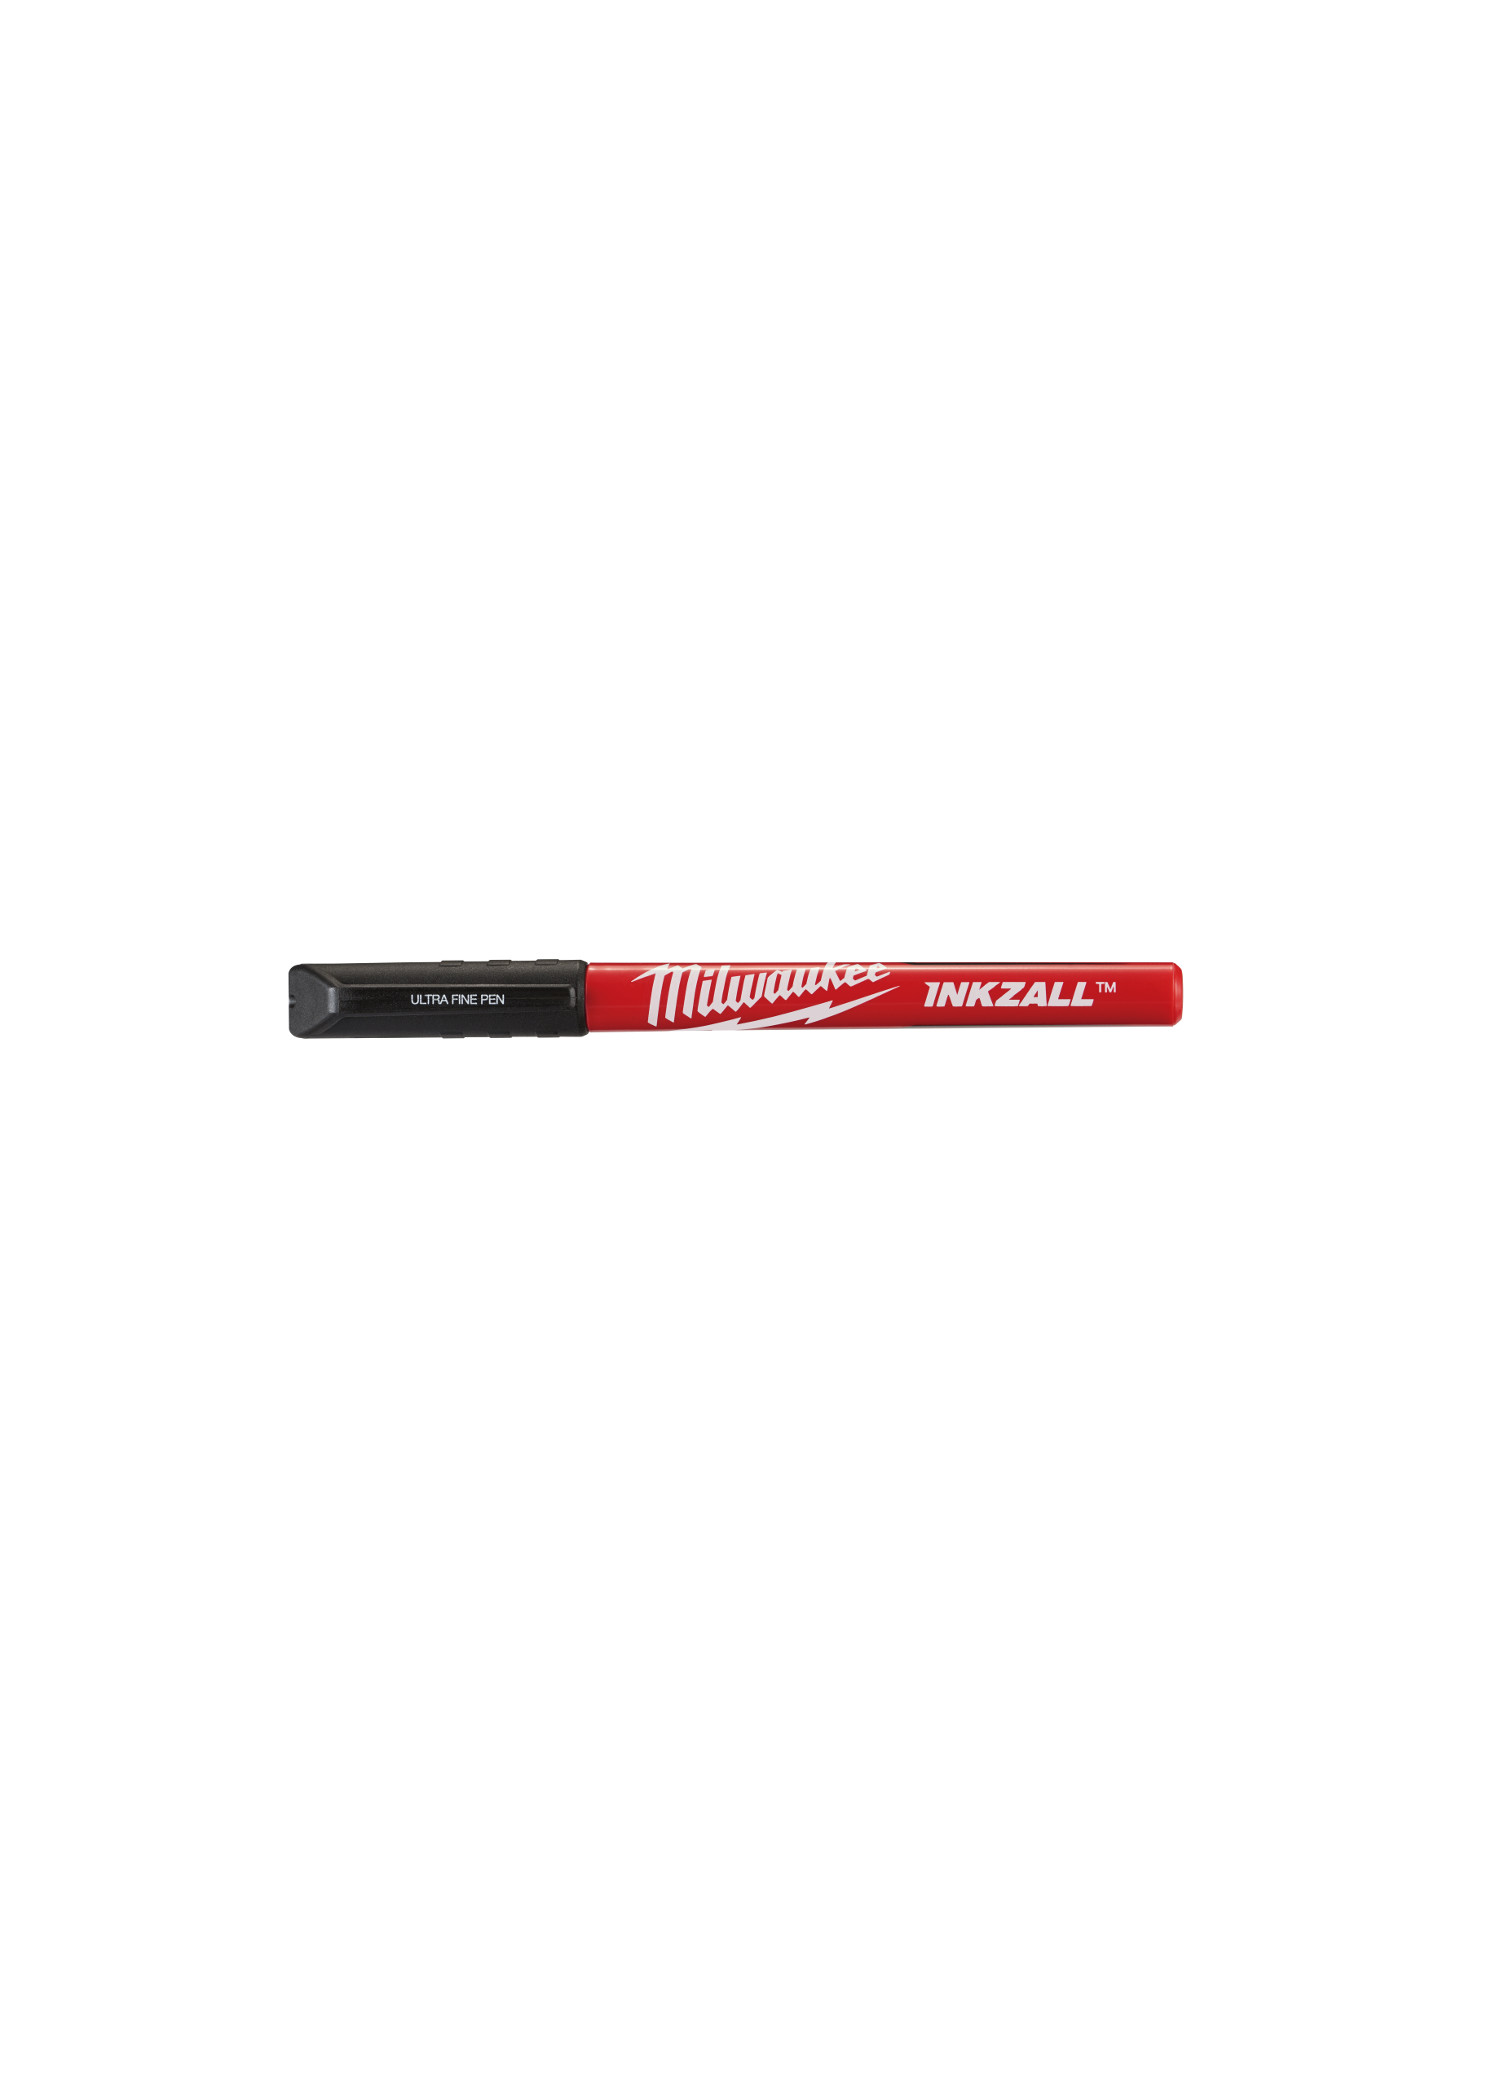 4 pk INKZALL Black Ultra Fine Point Pens